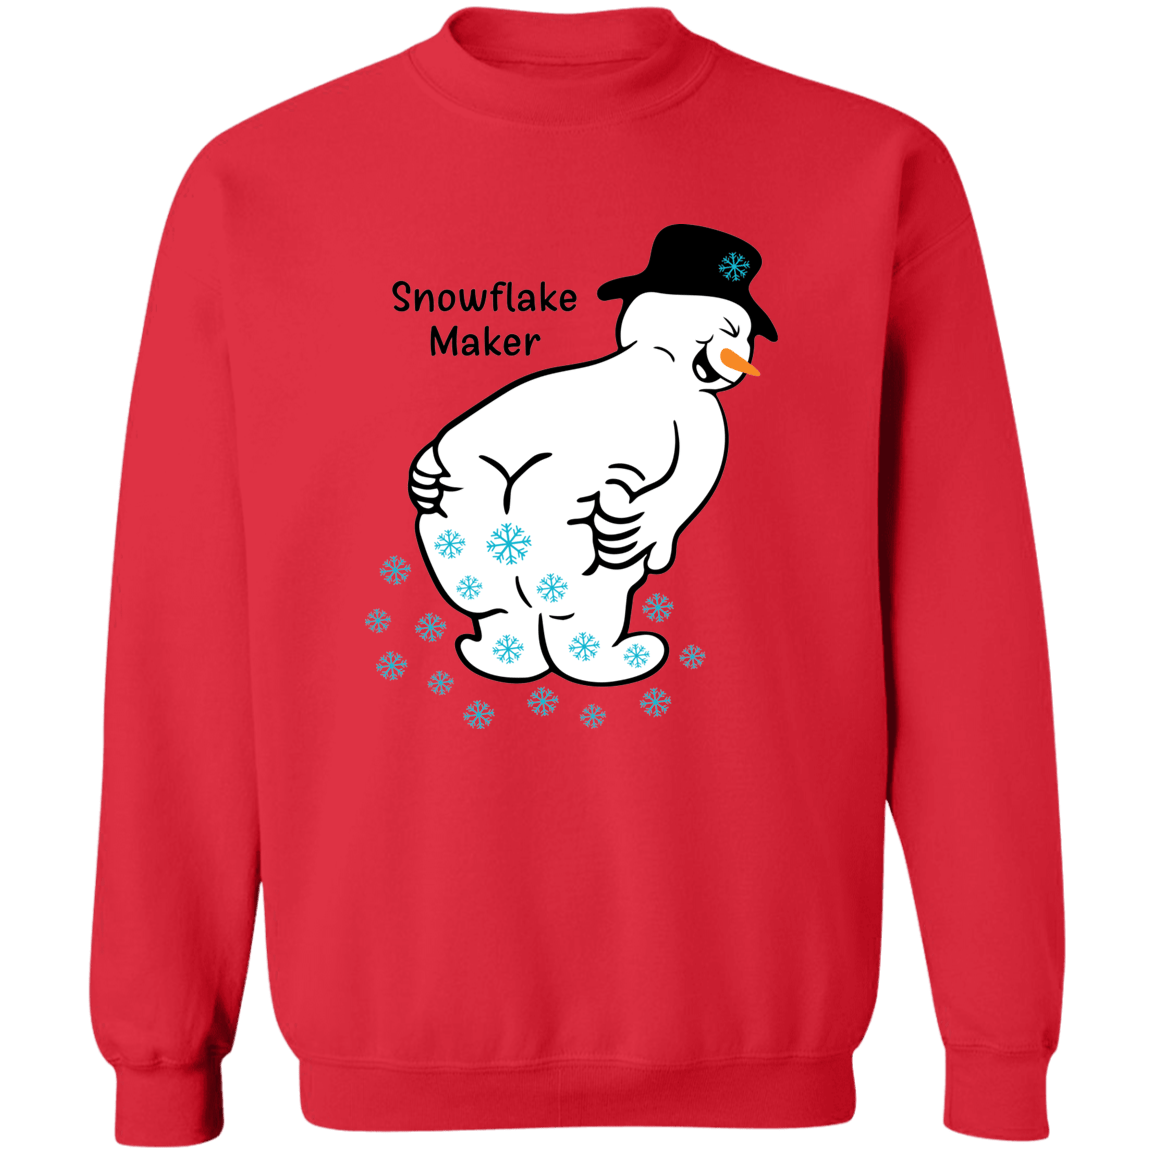 Snowflake Maker Sweatshirt